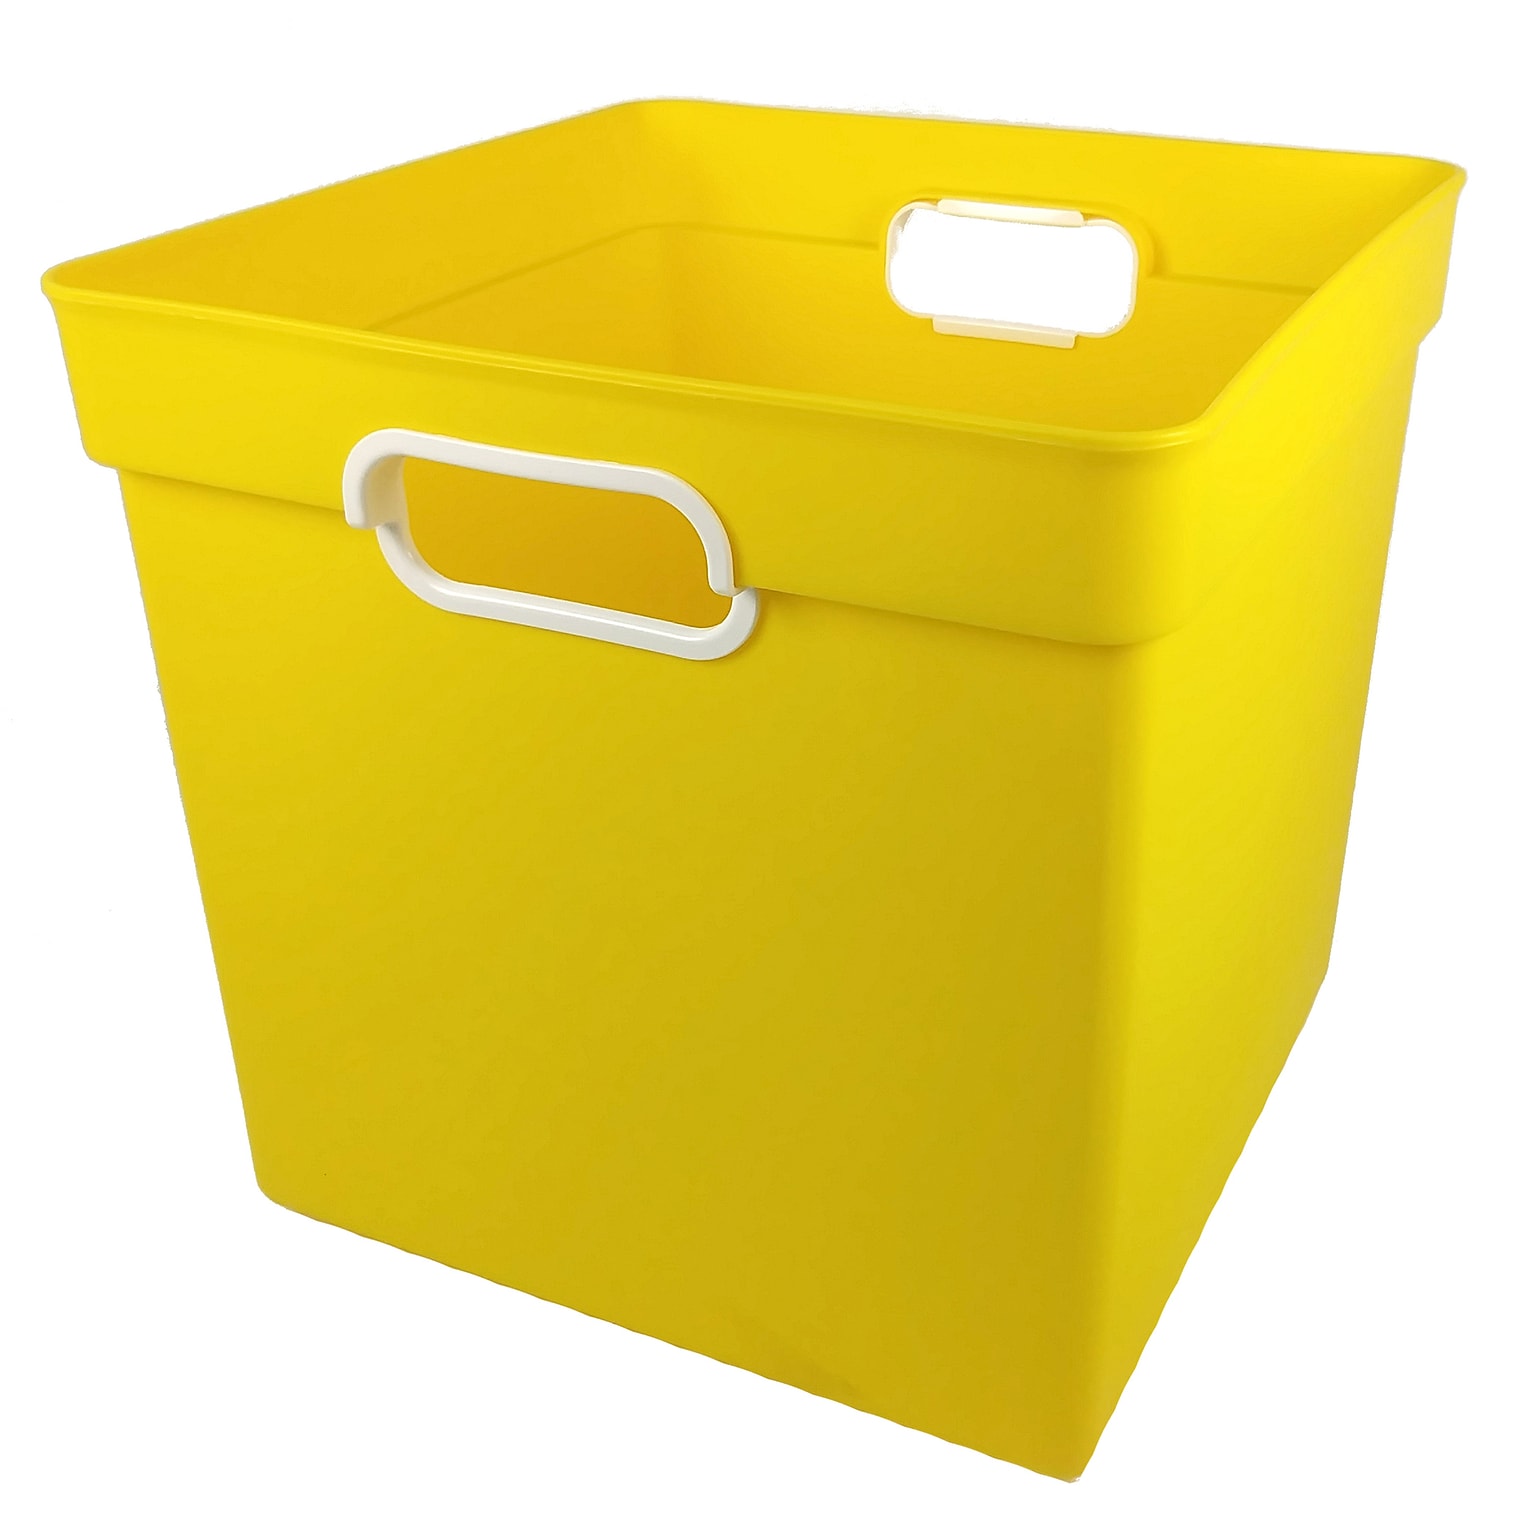 Romanoff Products Cube Bin Yellow, Set of 3 (ROM72503BN)